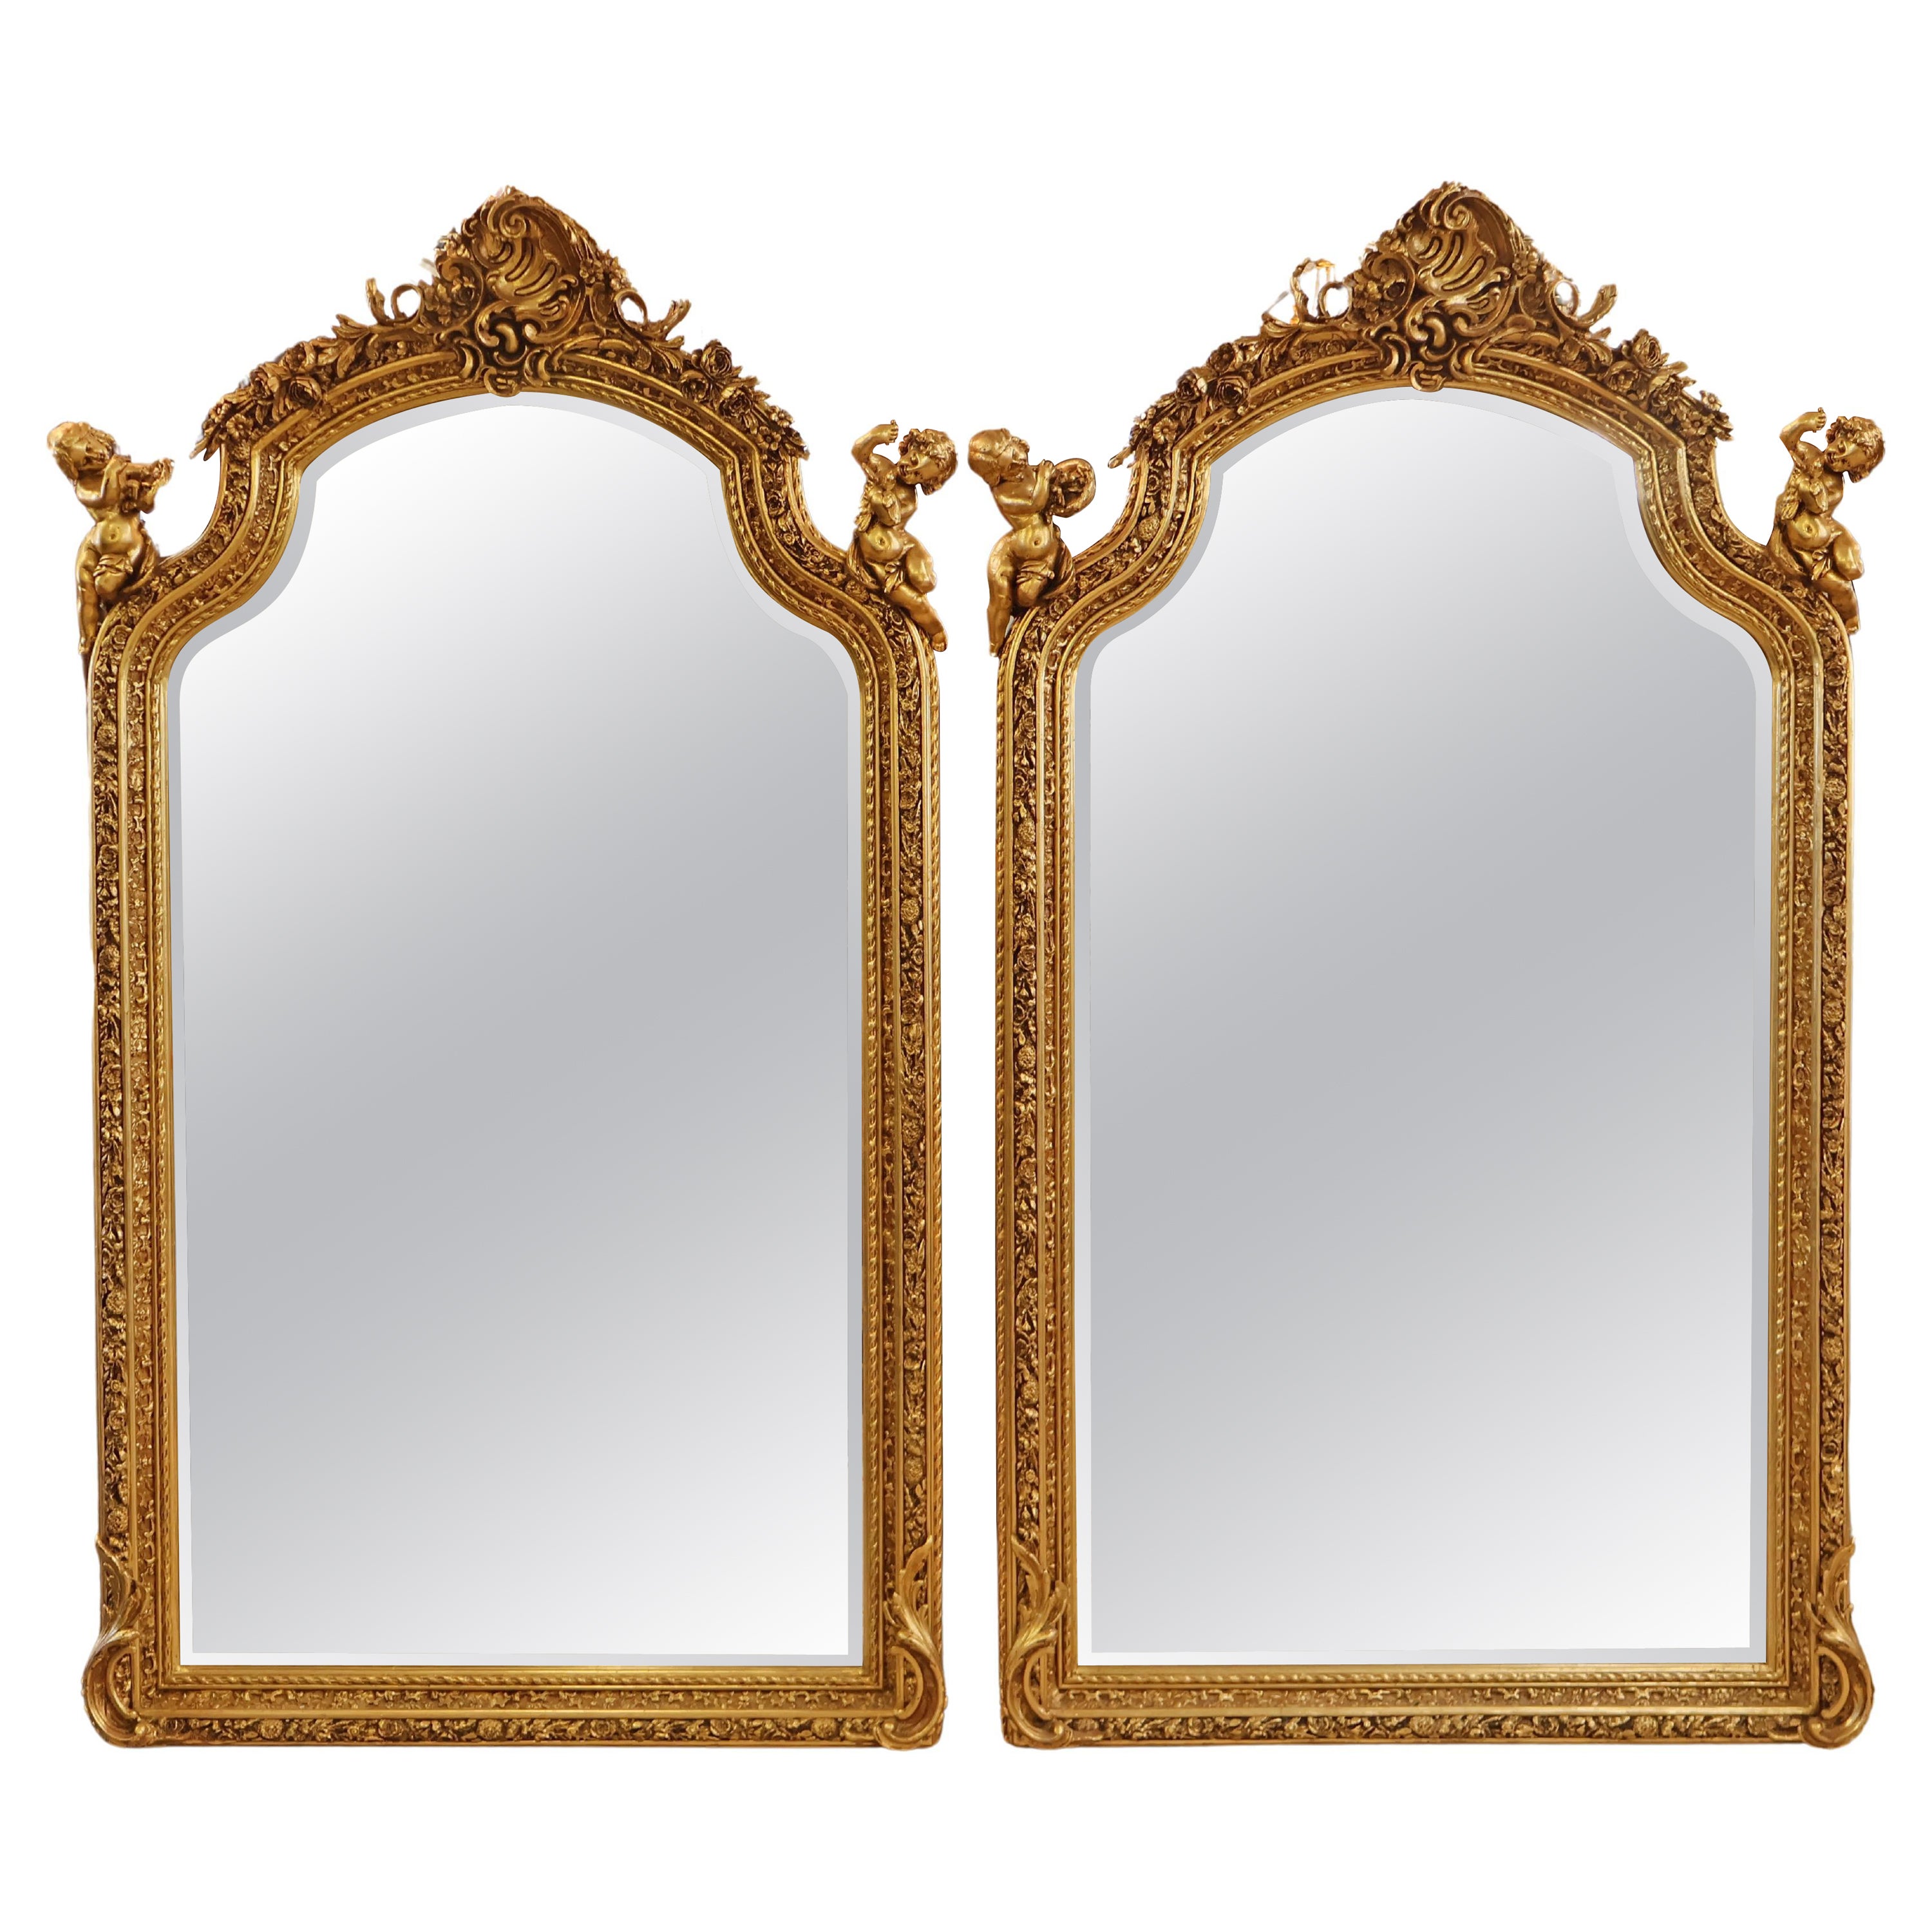 Pair of Monumental Gold Gil Louis XVI French Style Cherub Putti Beveled Mirrors  For Sale